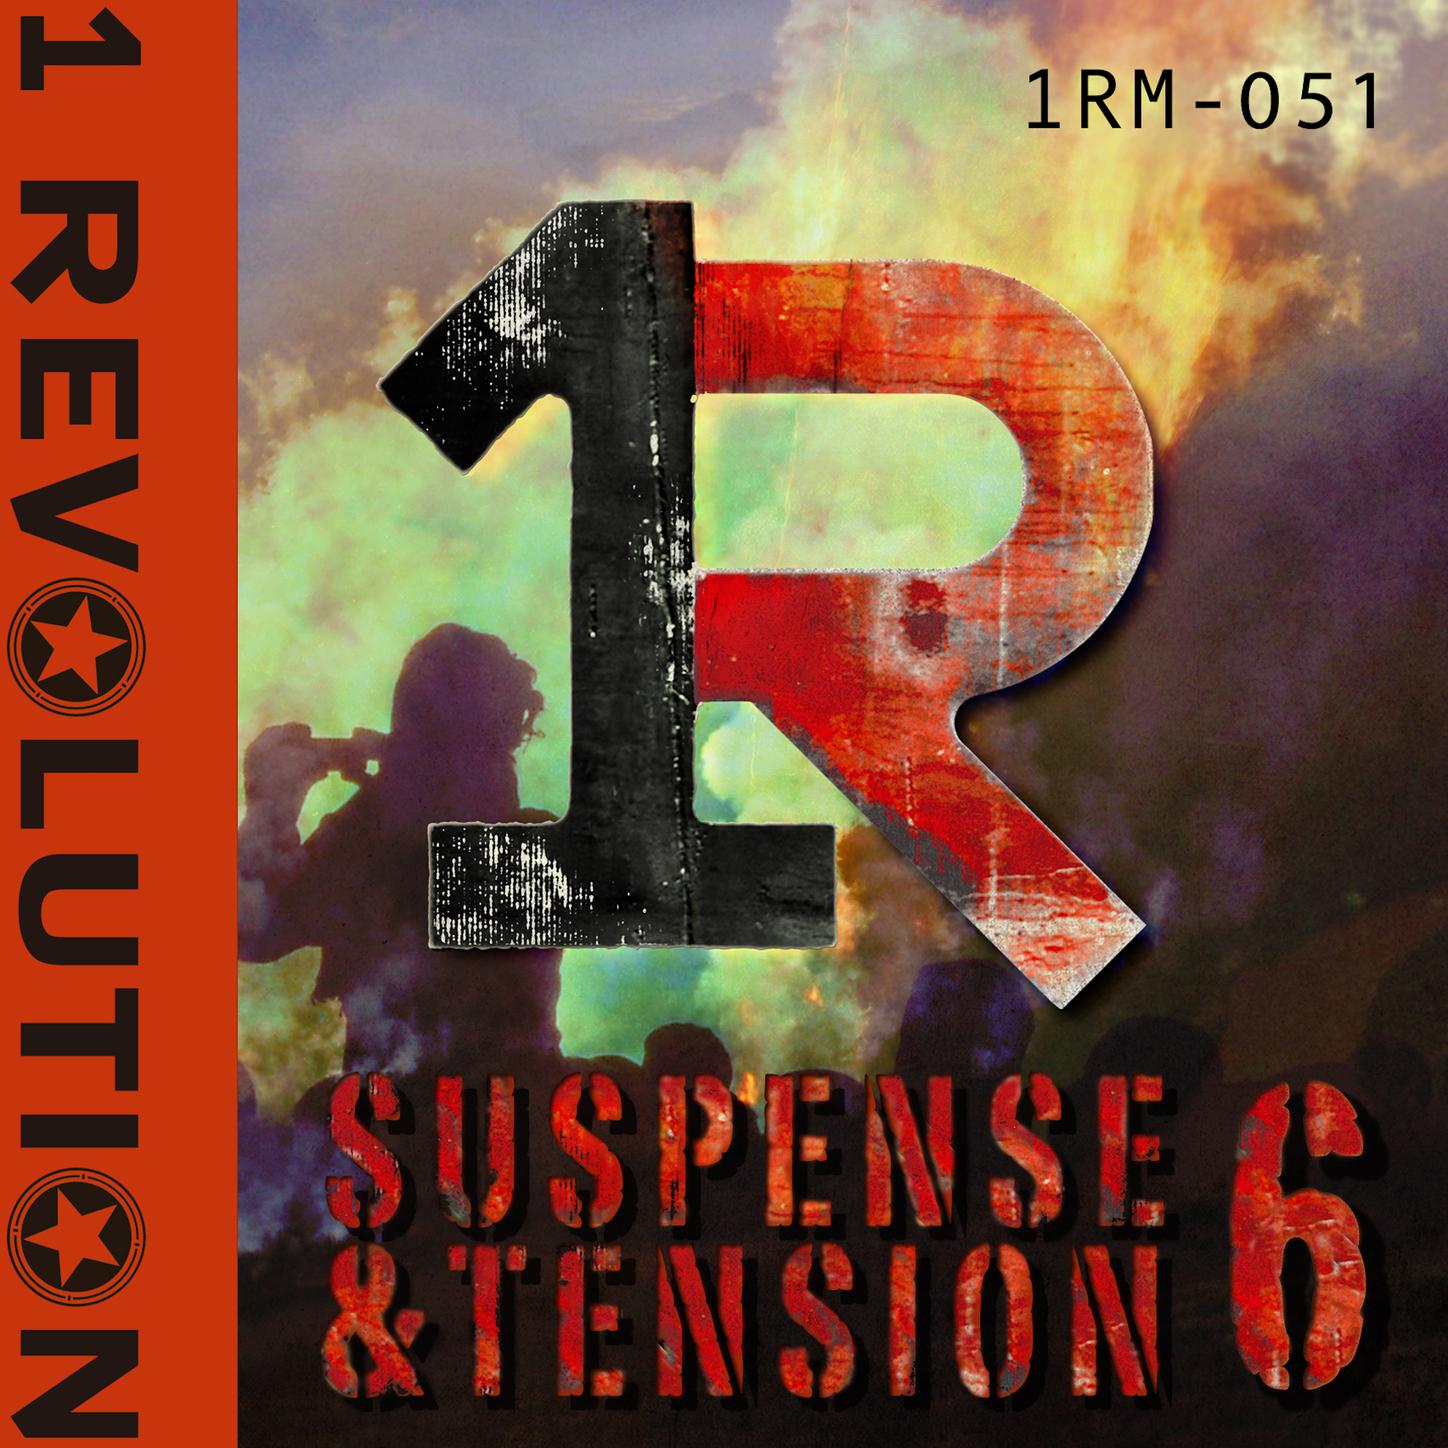 Suspense & Tension, Vol. 6